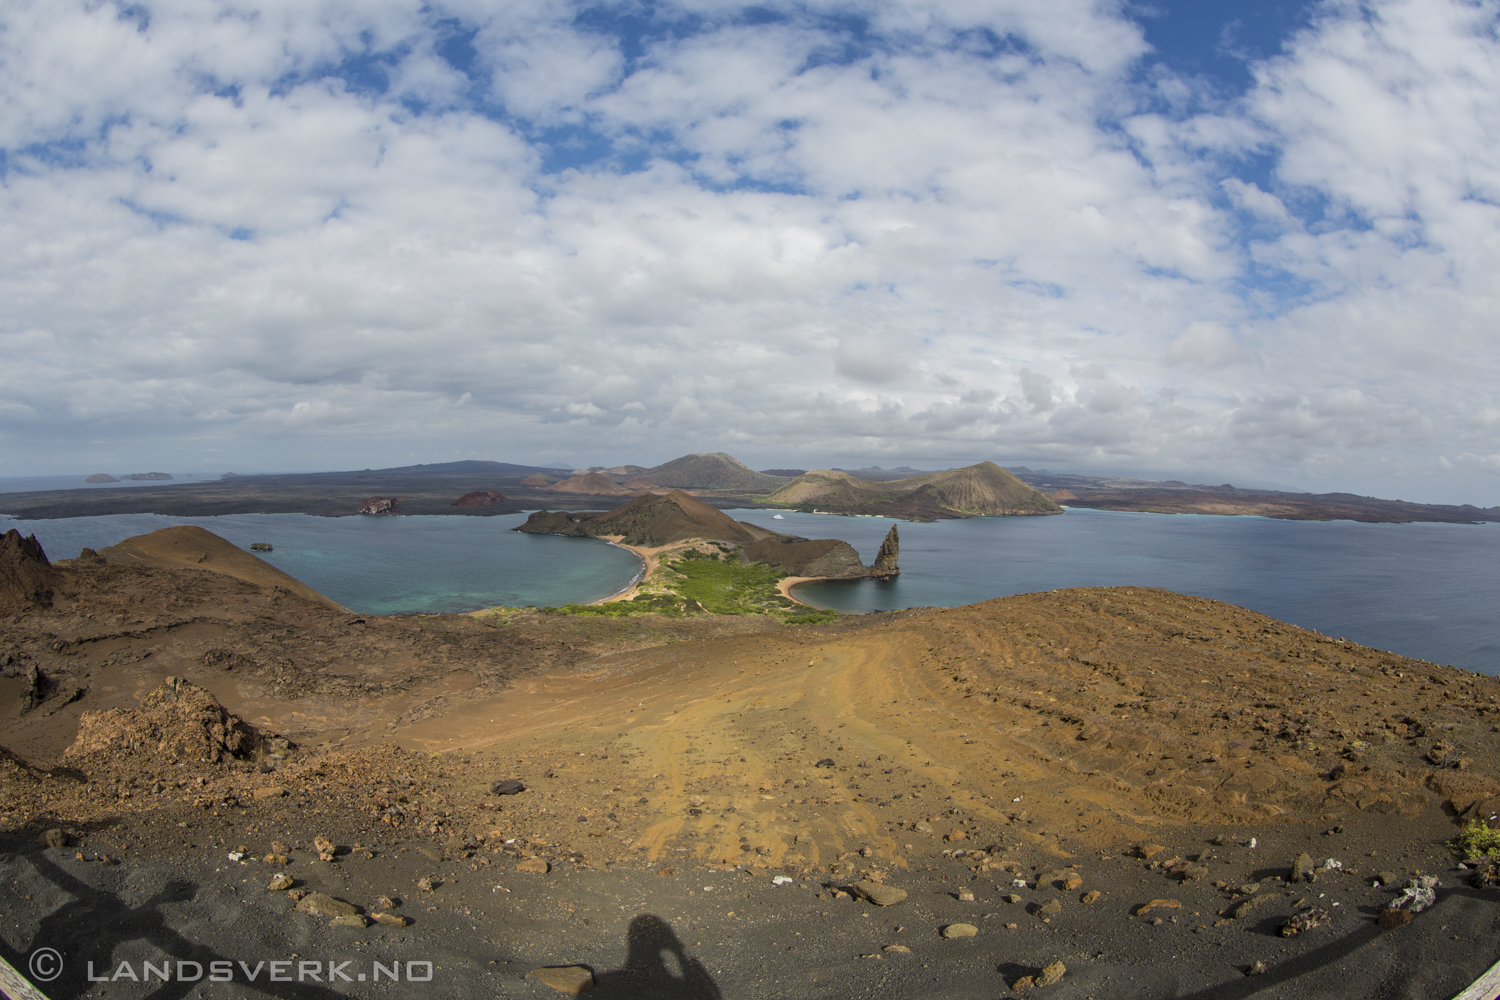 Bartolome Island, Galapagos. 

(Canon EOS 5D Mark III / Canon EF 8-15mm f/4 L USM Fisheye)